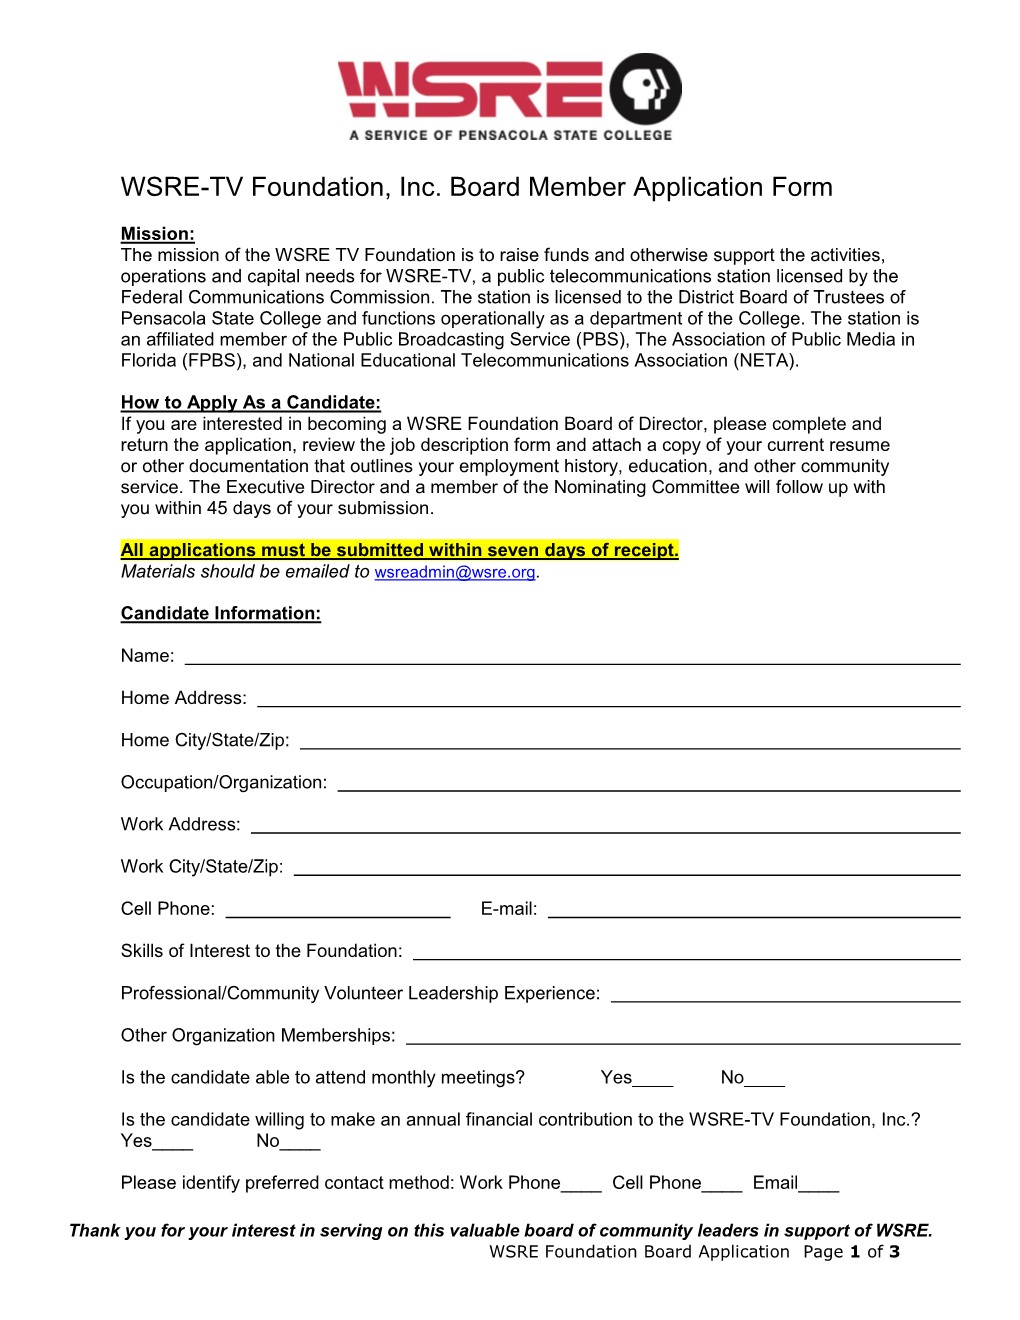 WSRE TV Foundation Board Application